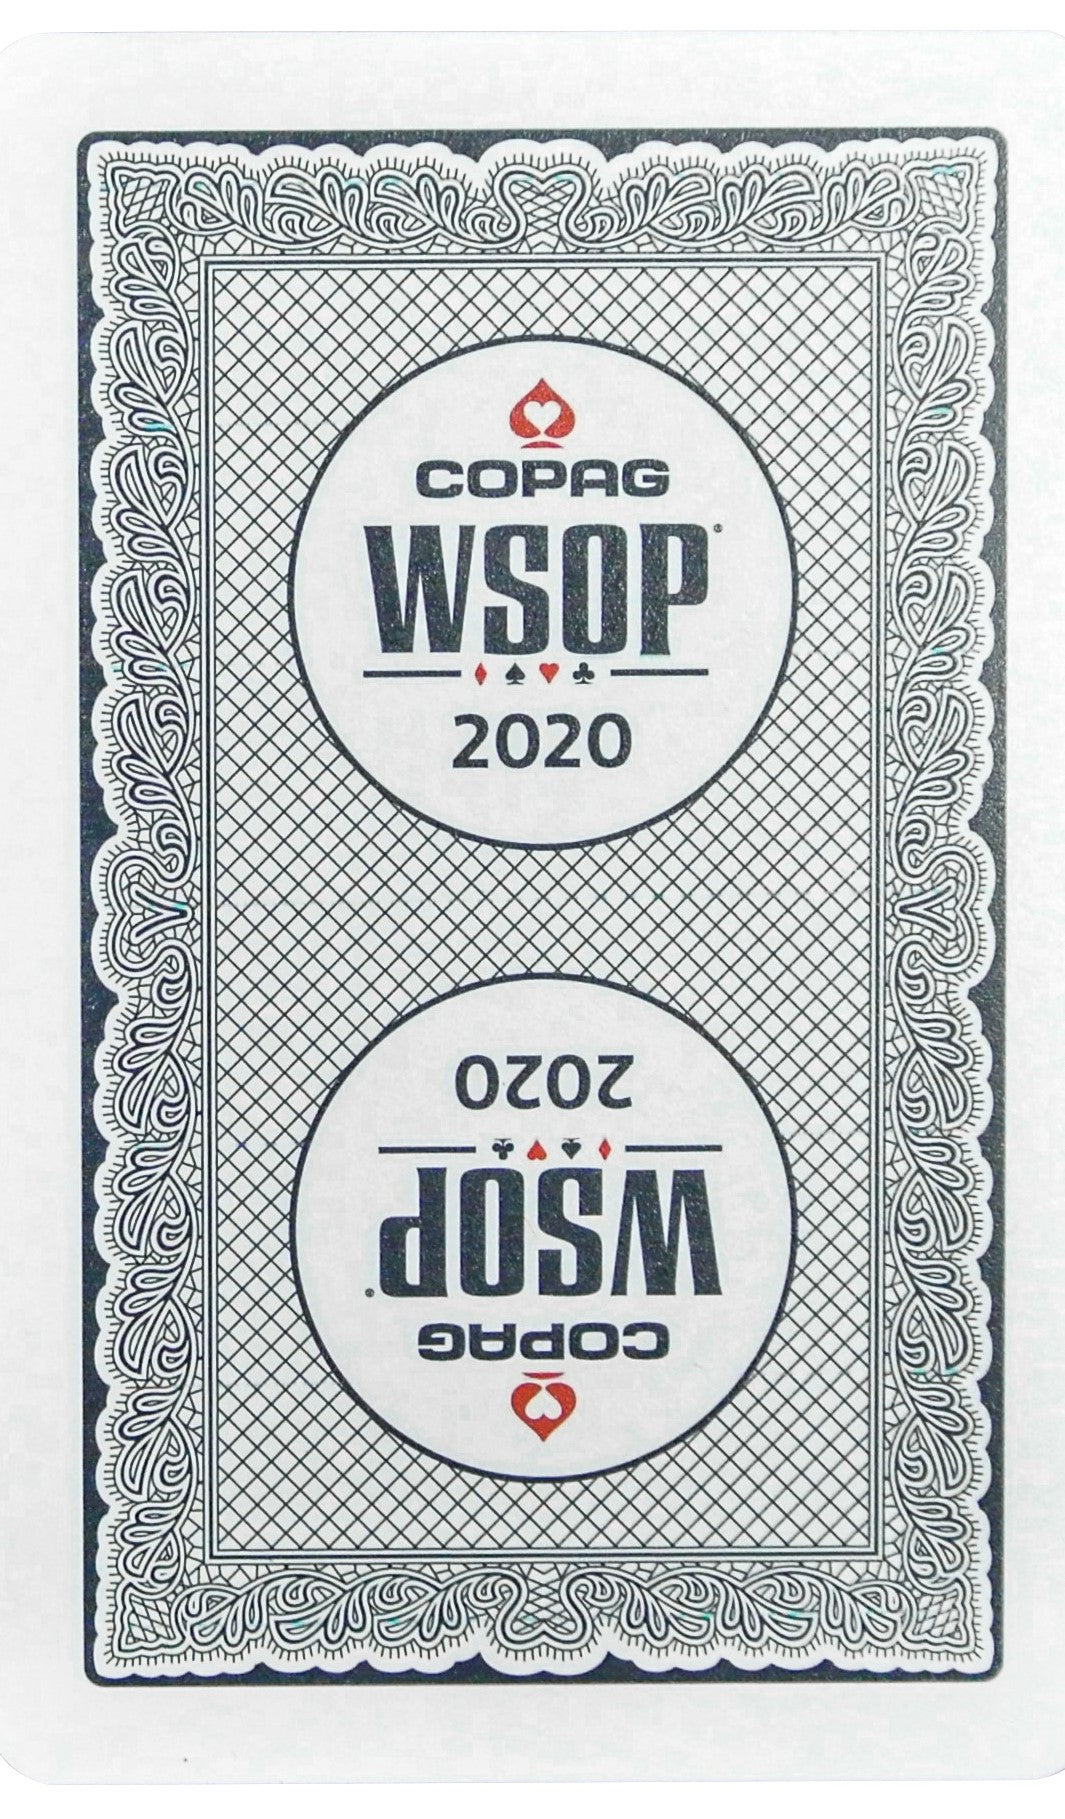 UV MARKED CARDS COPAG 2020 WSOP BRIDGE SIZE REGULAR